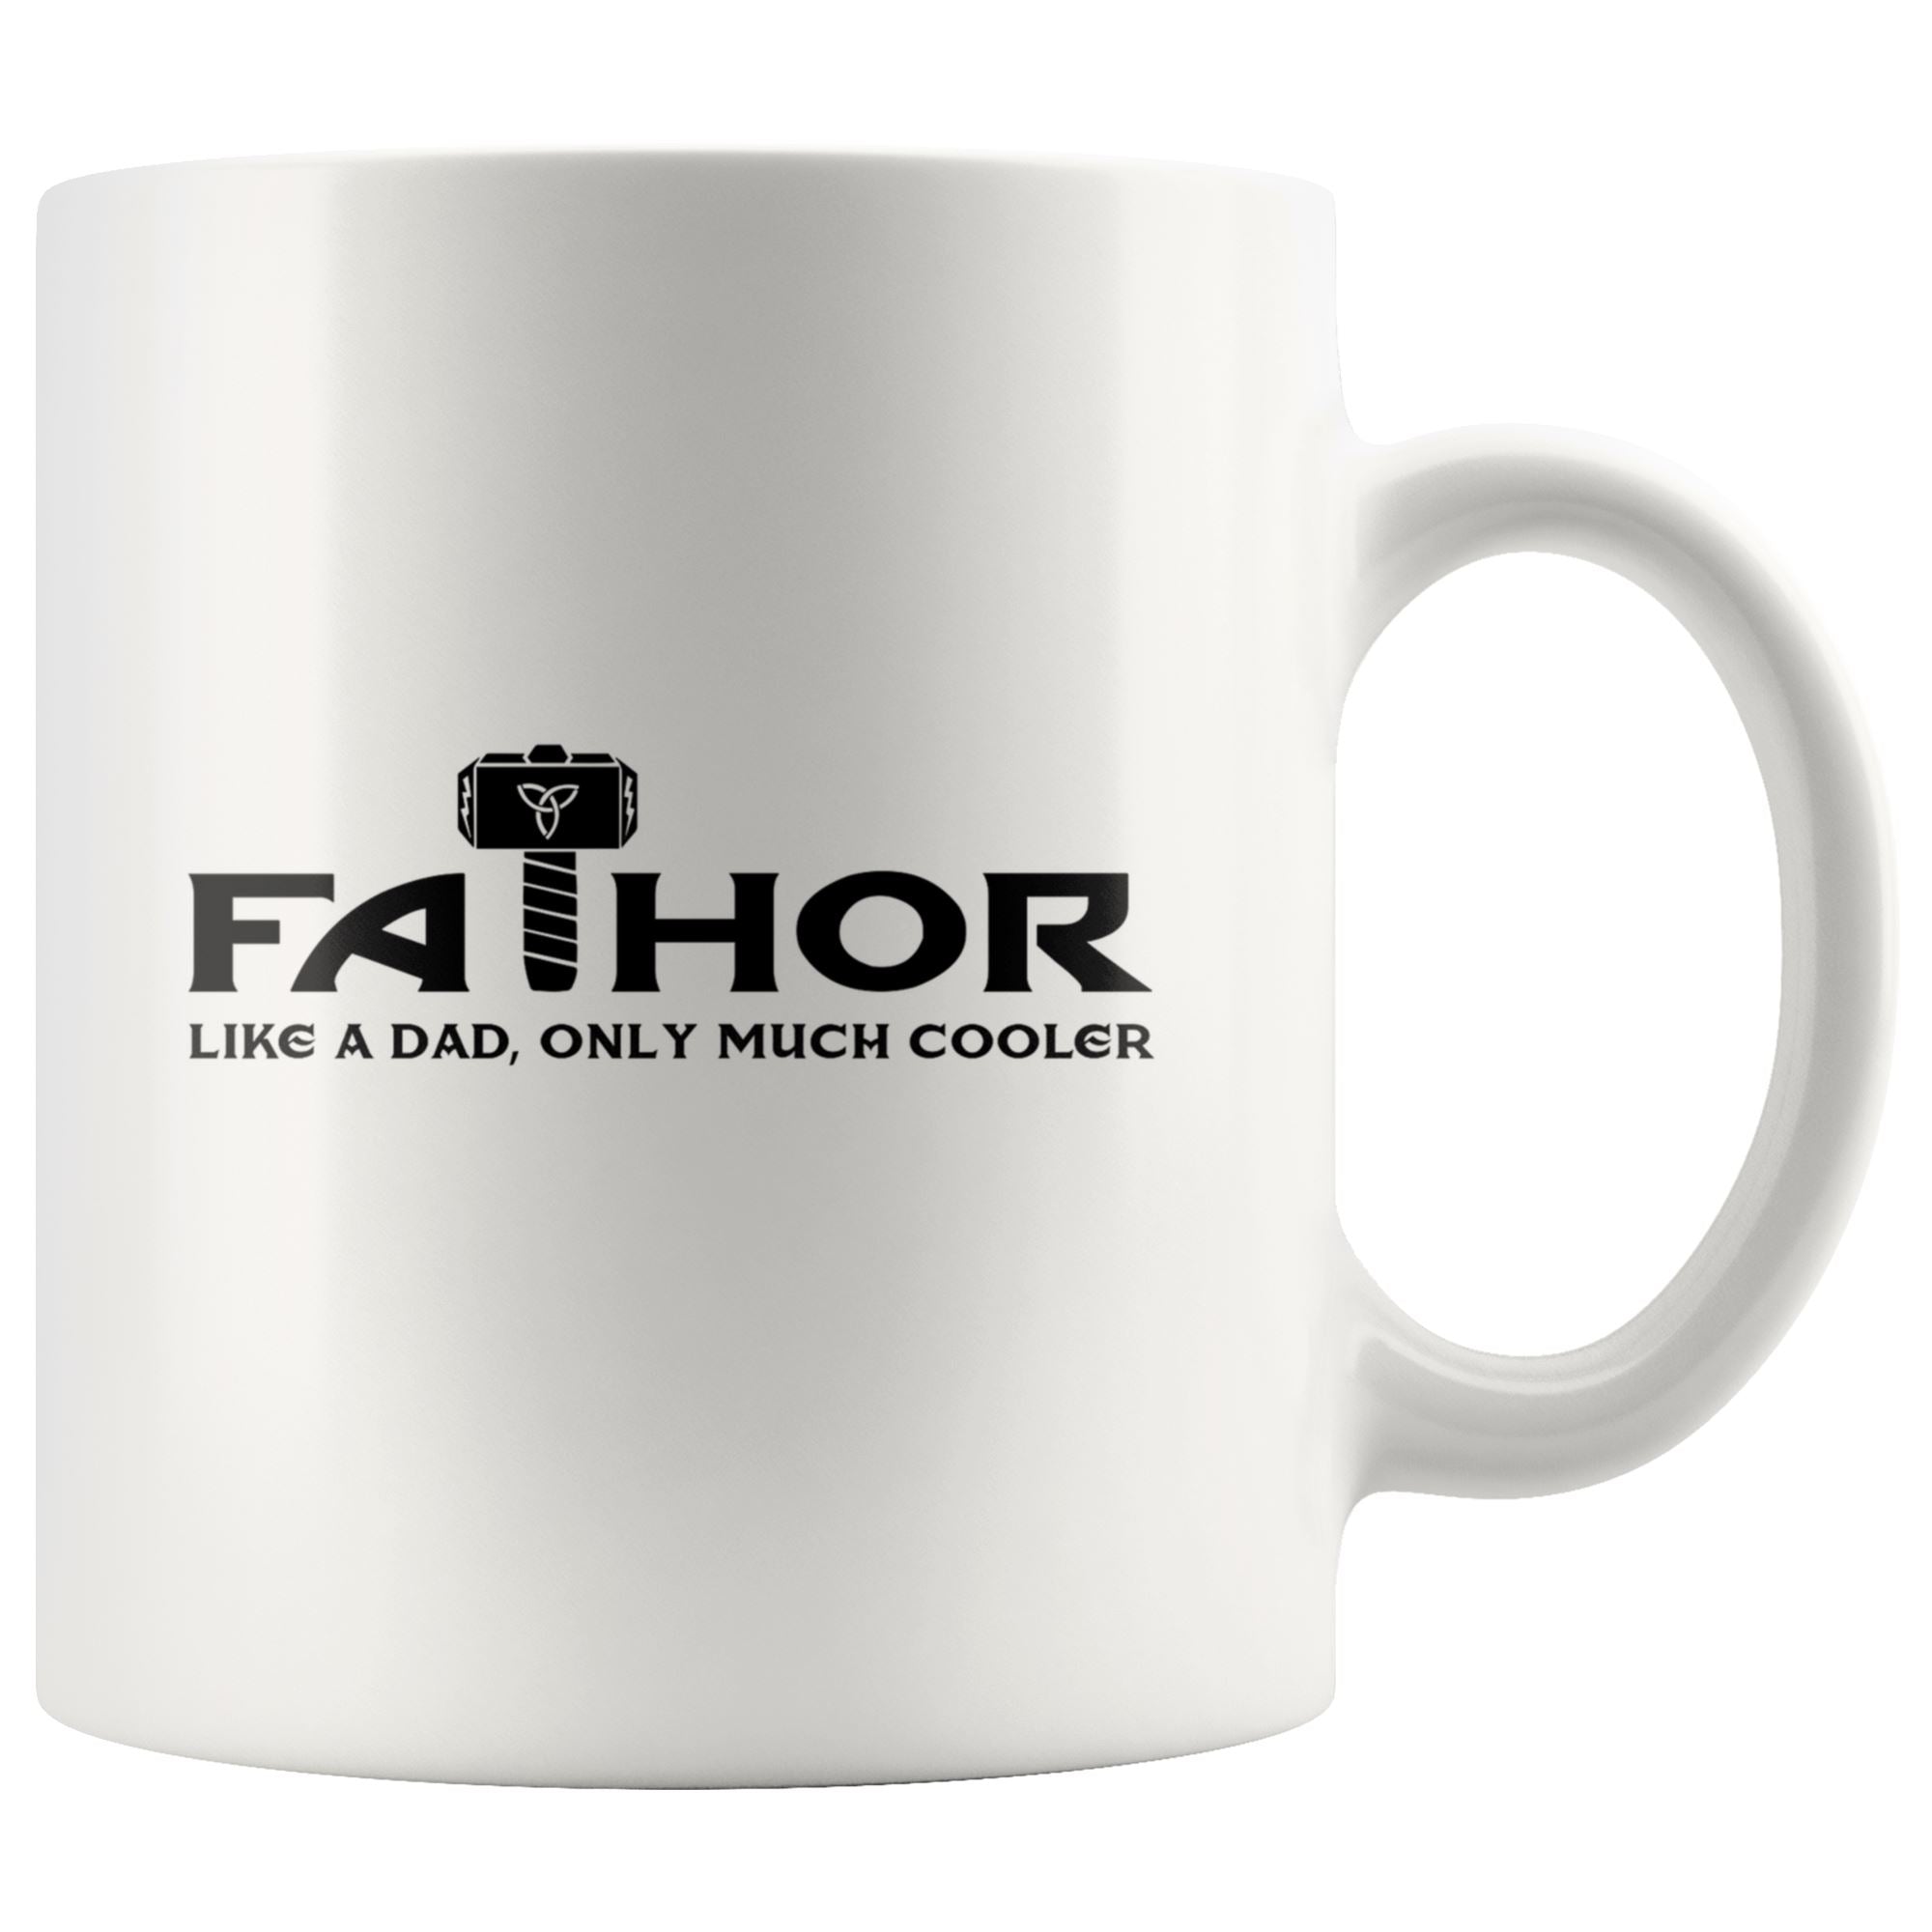 Fathor Drinkware teelaunch 11oz Mug 